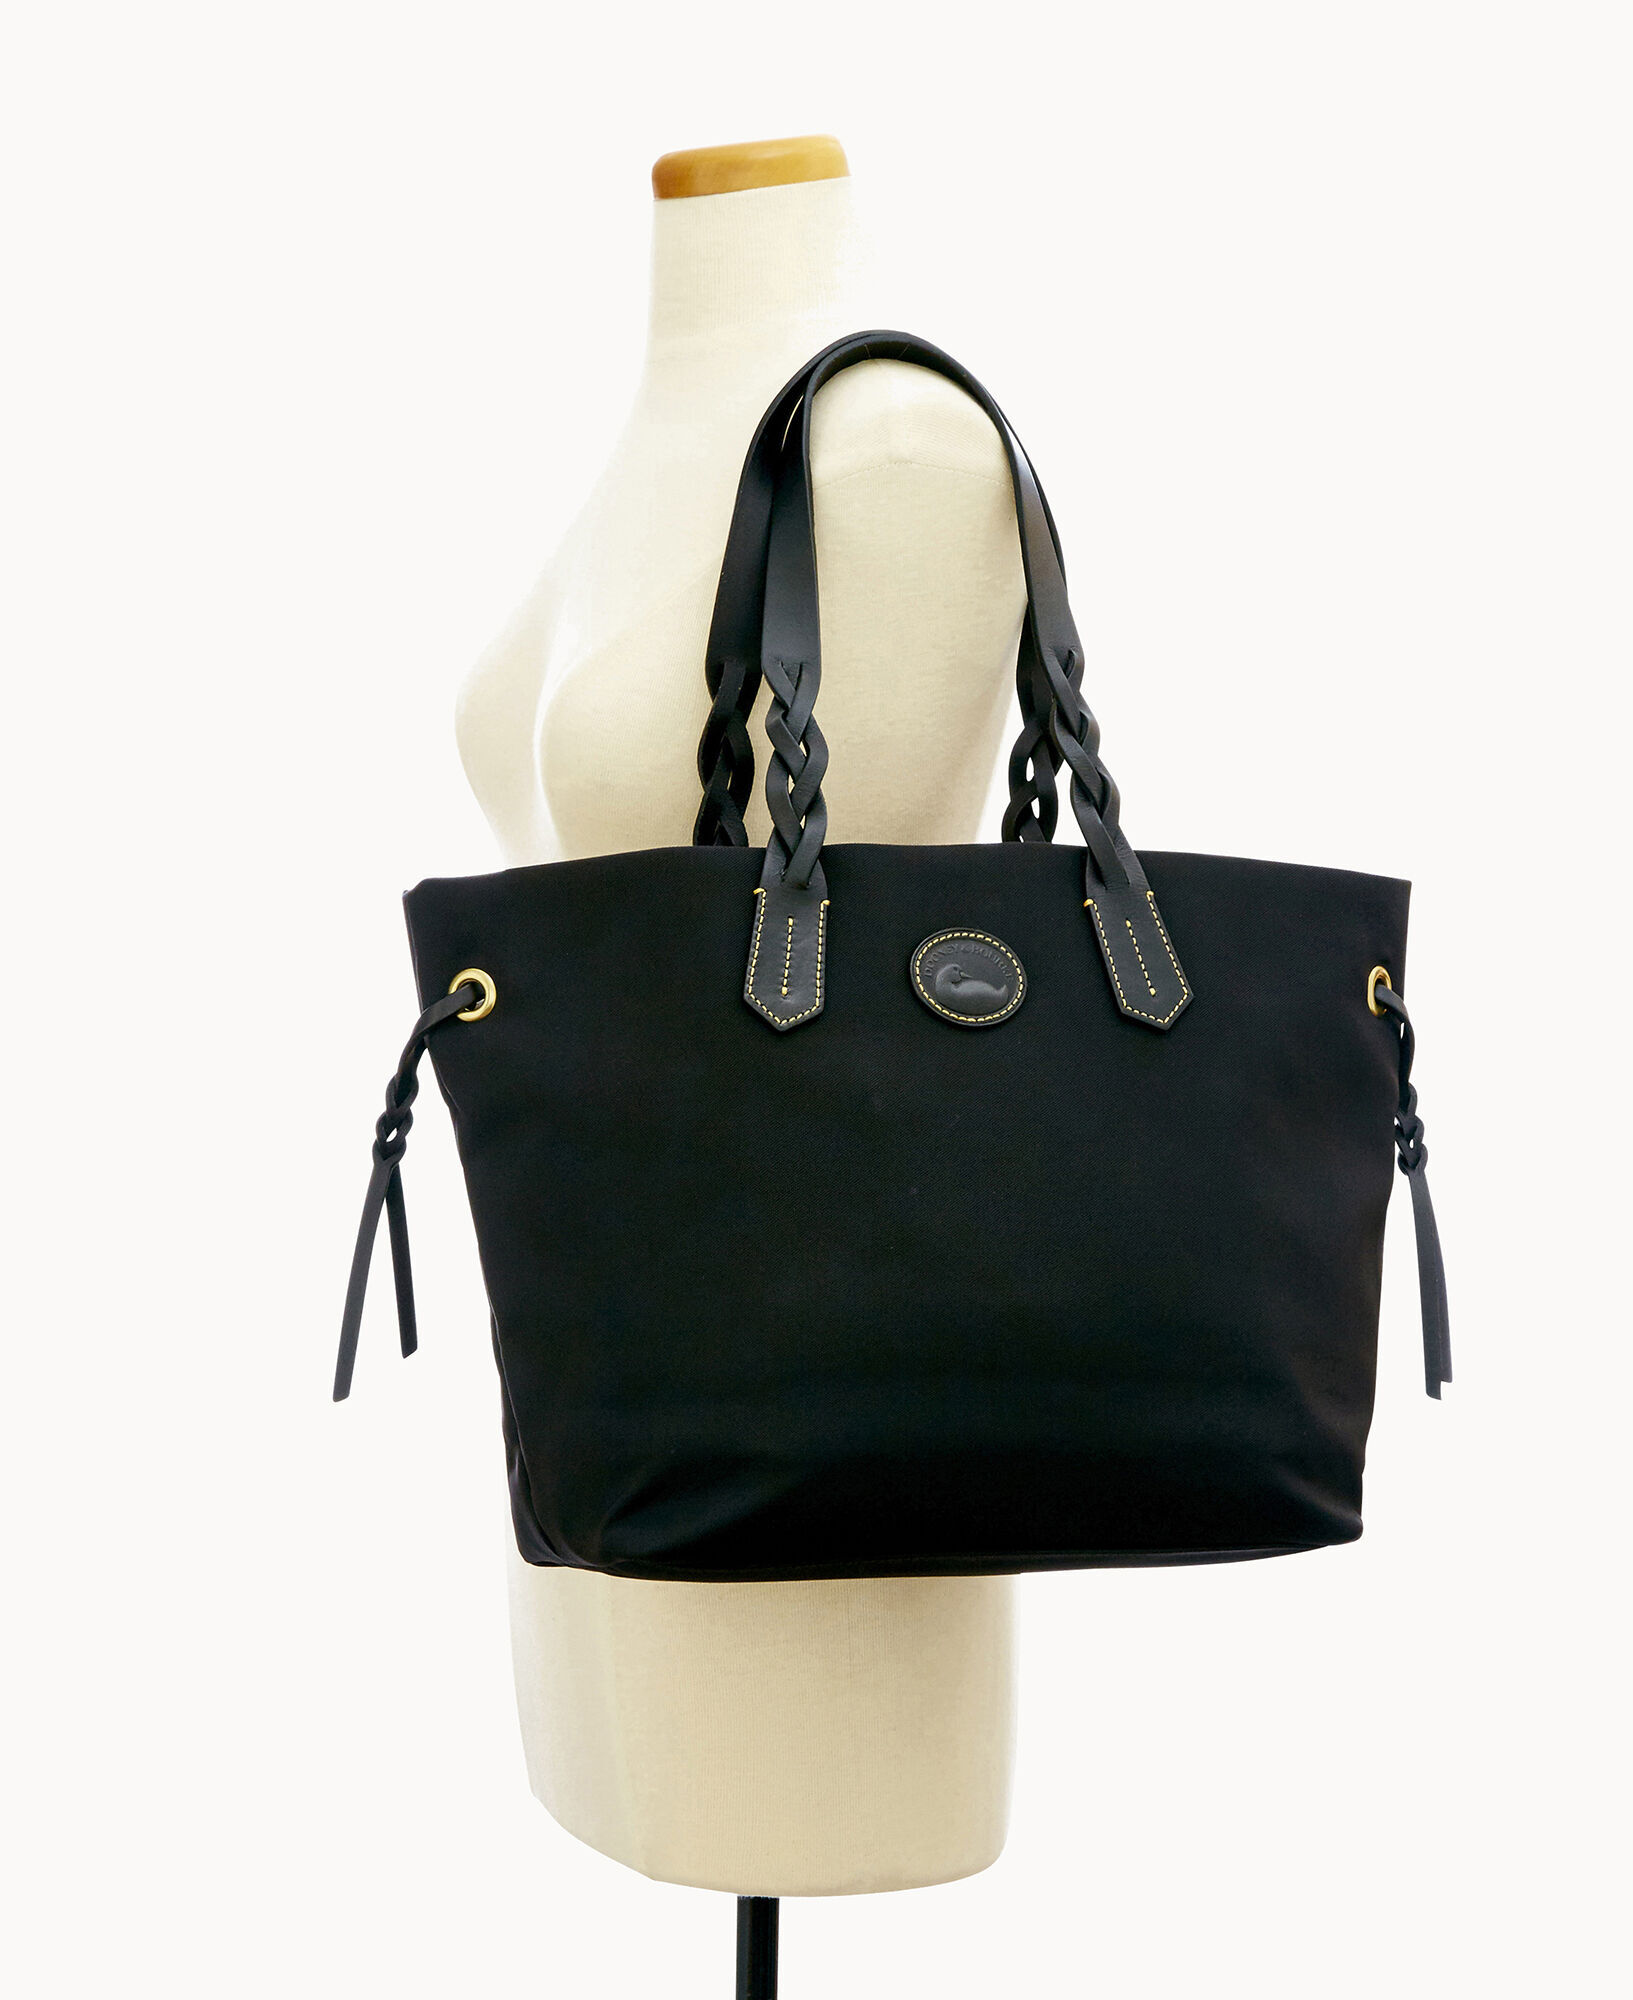 Handbag Organizer For Louis Vuitton Jersey Bag with Single Bottle Hold